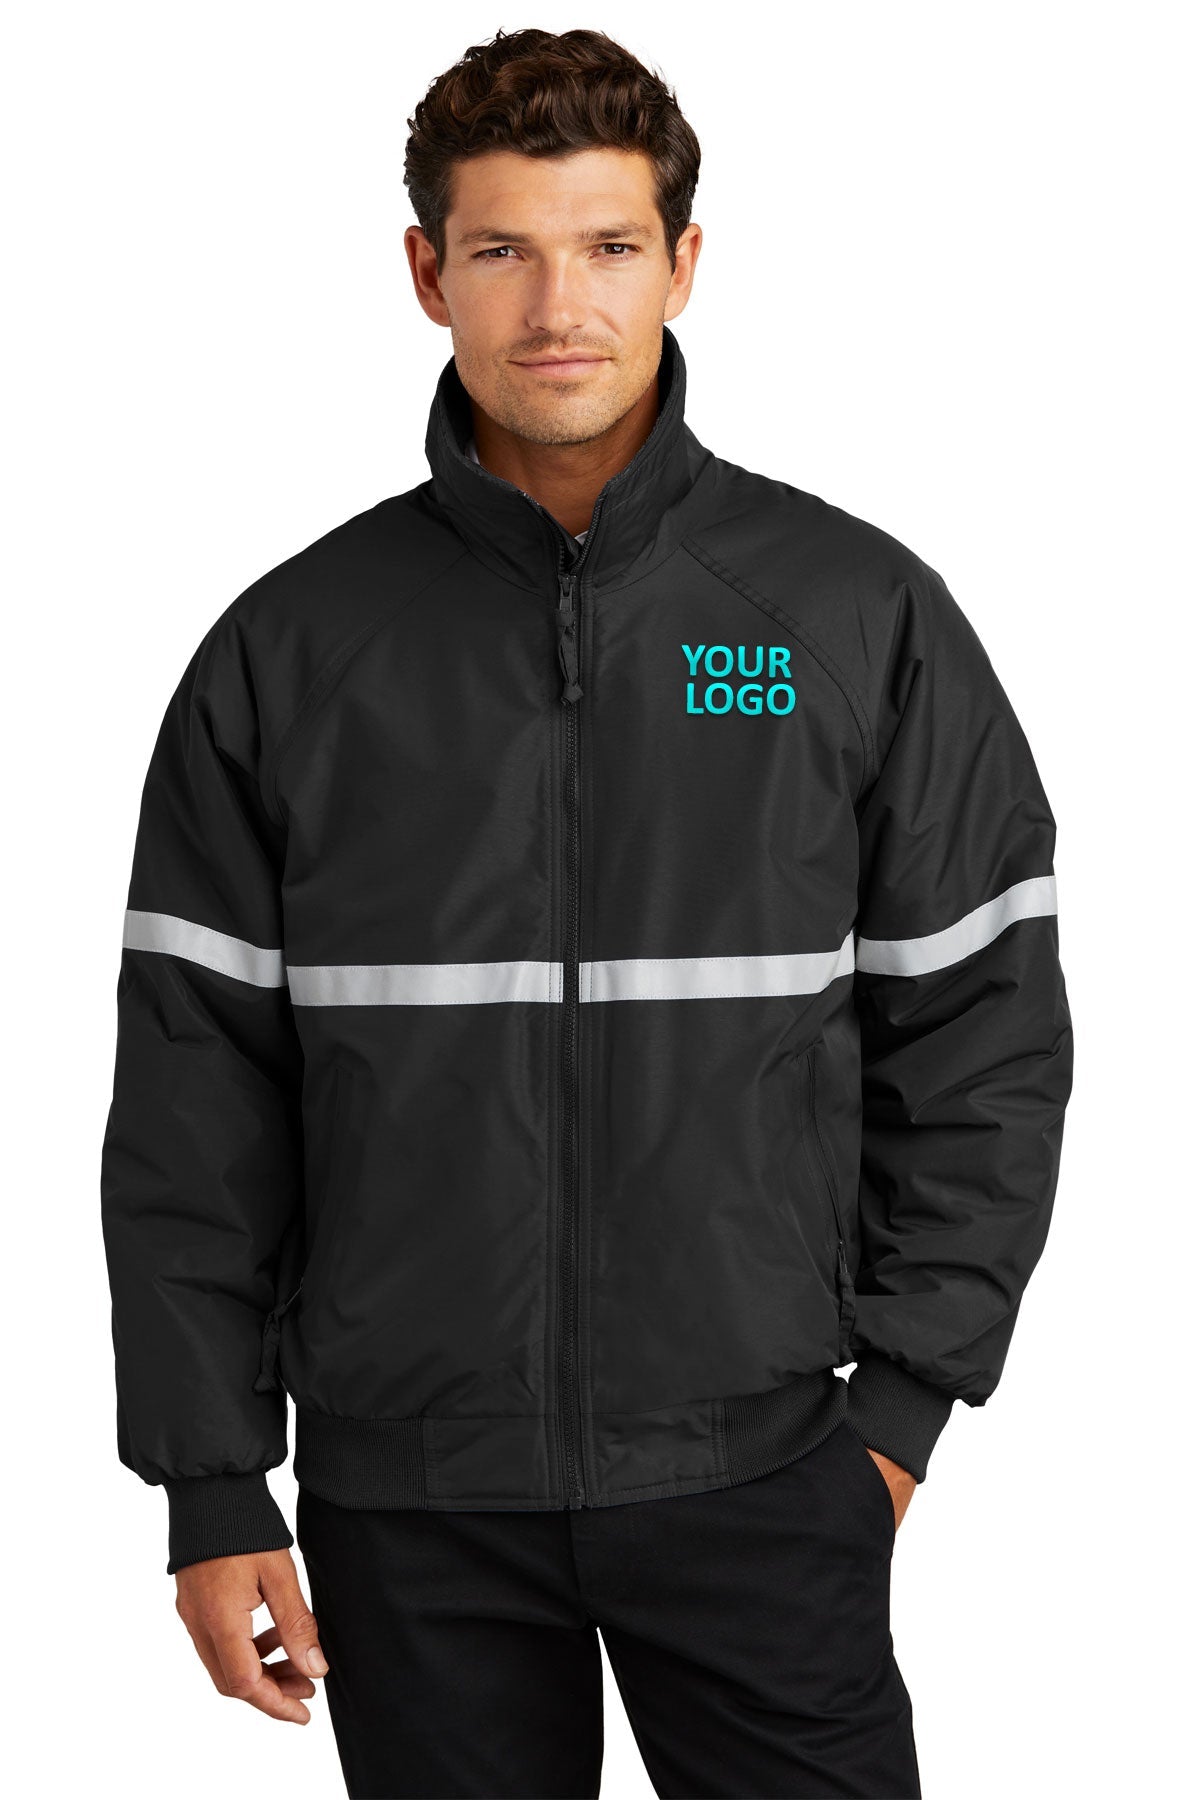 port authority true black/ true black/ reflective j754r jackets with company logo